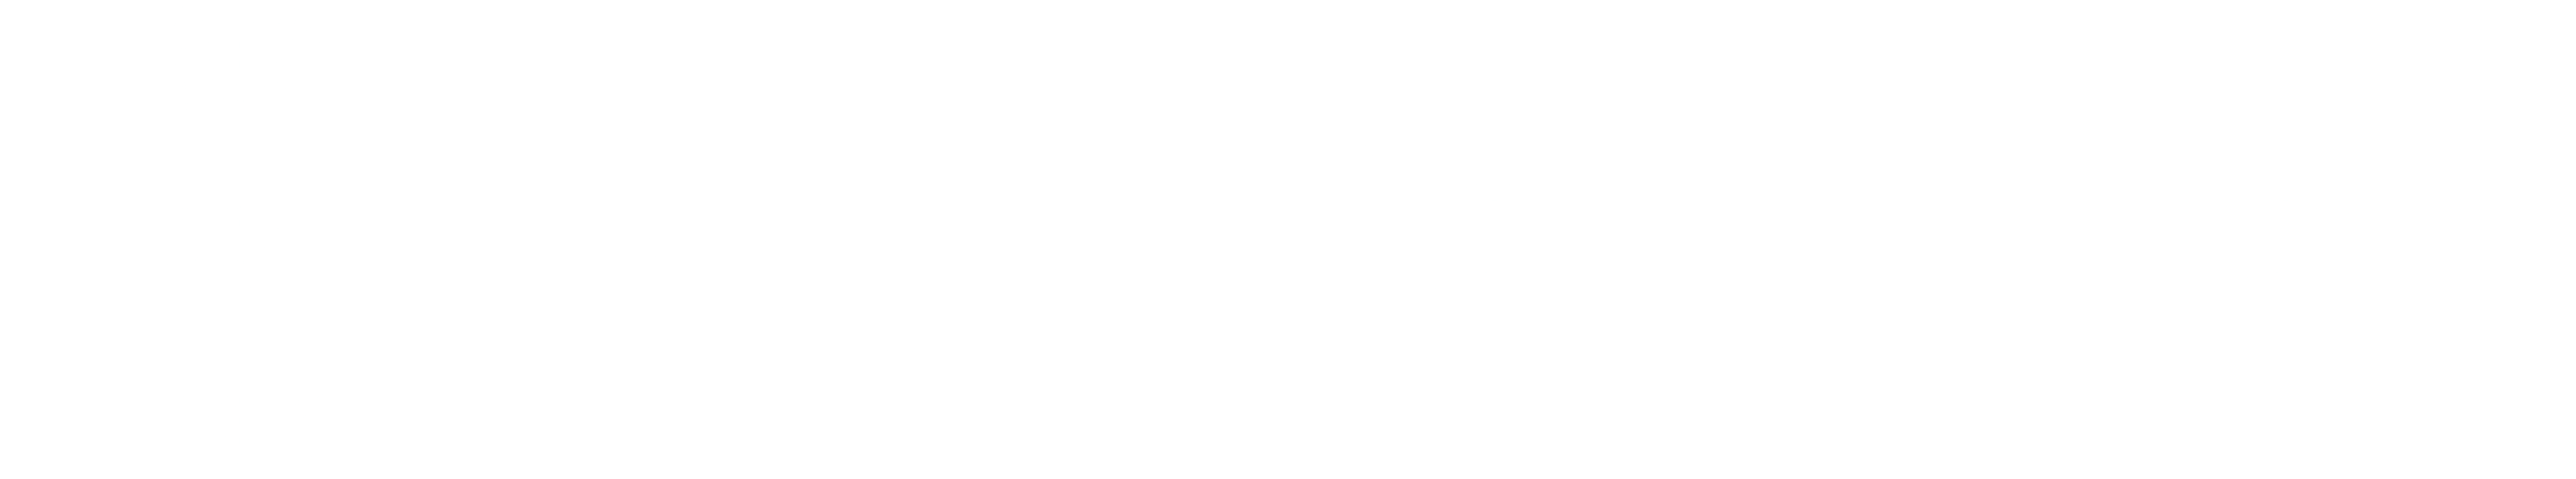 Re7 Capital